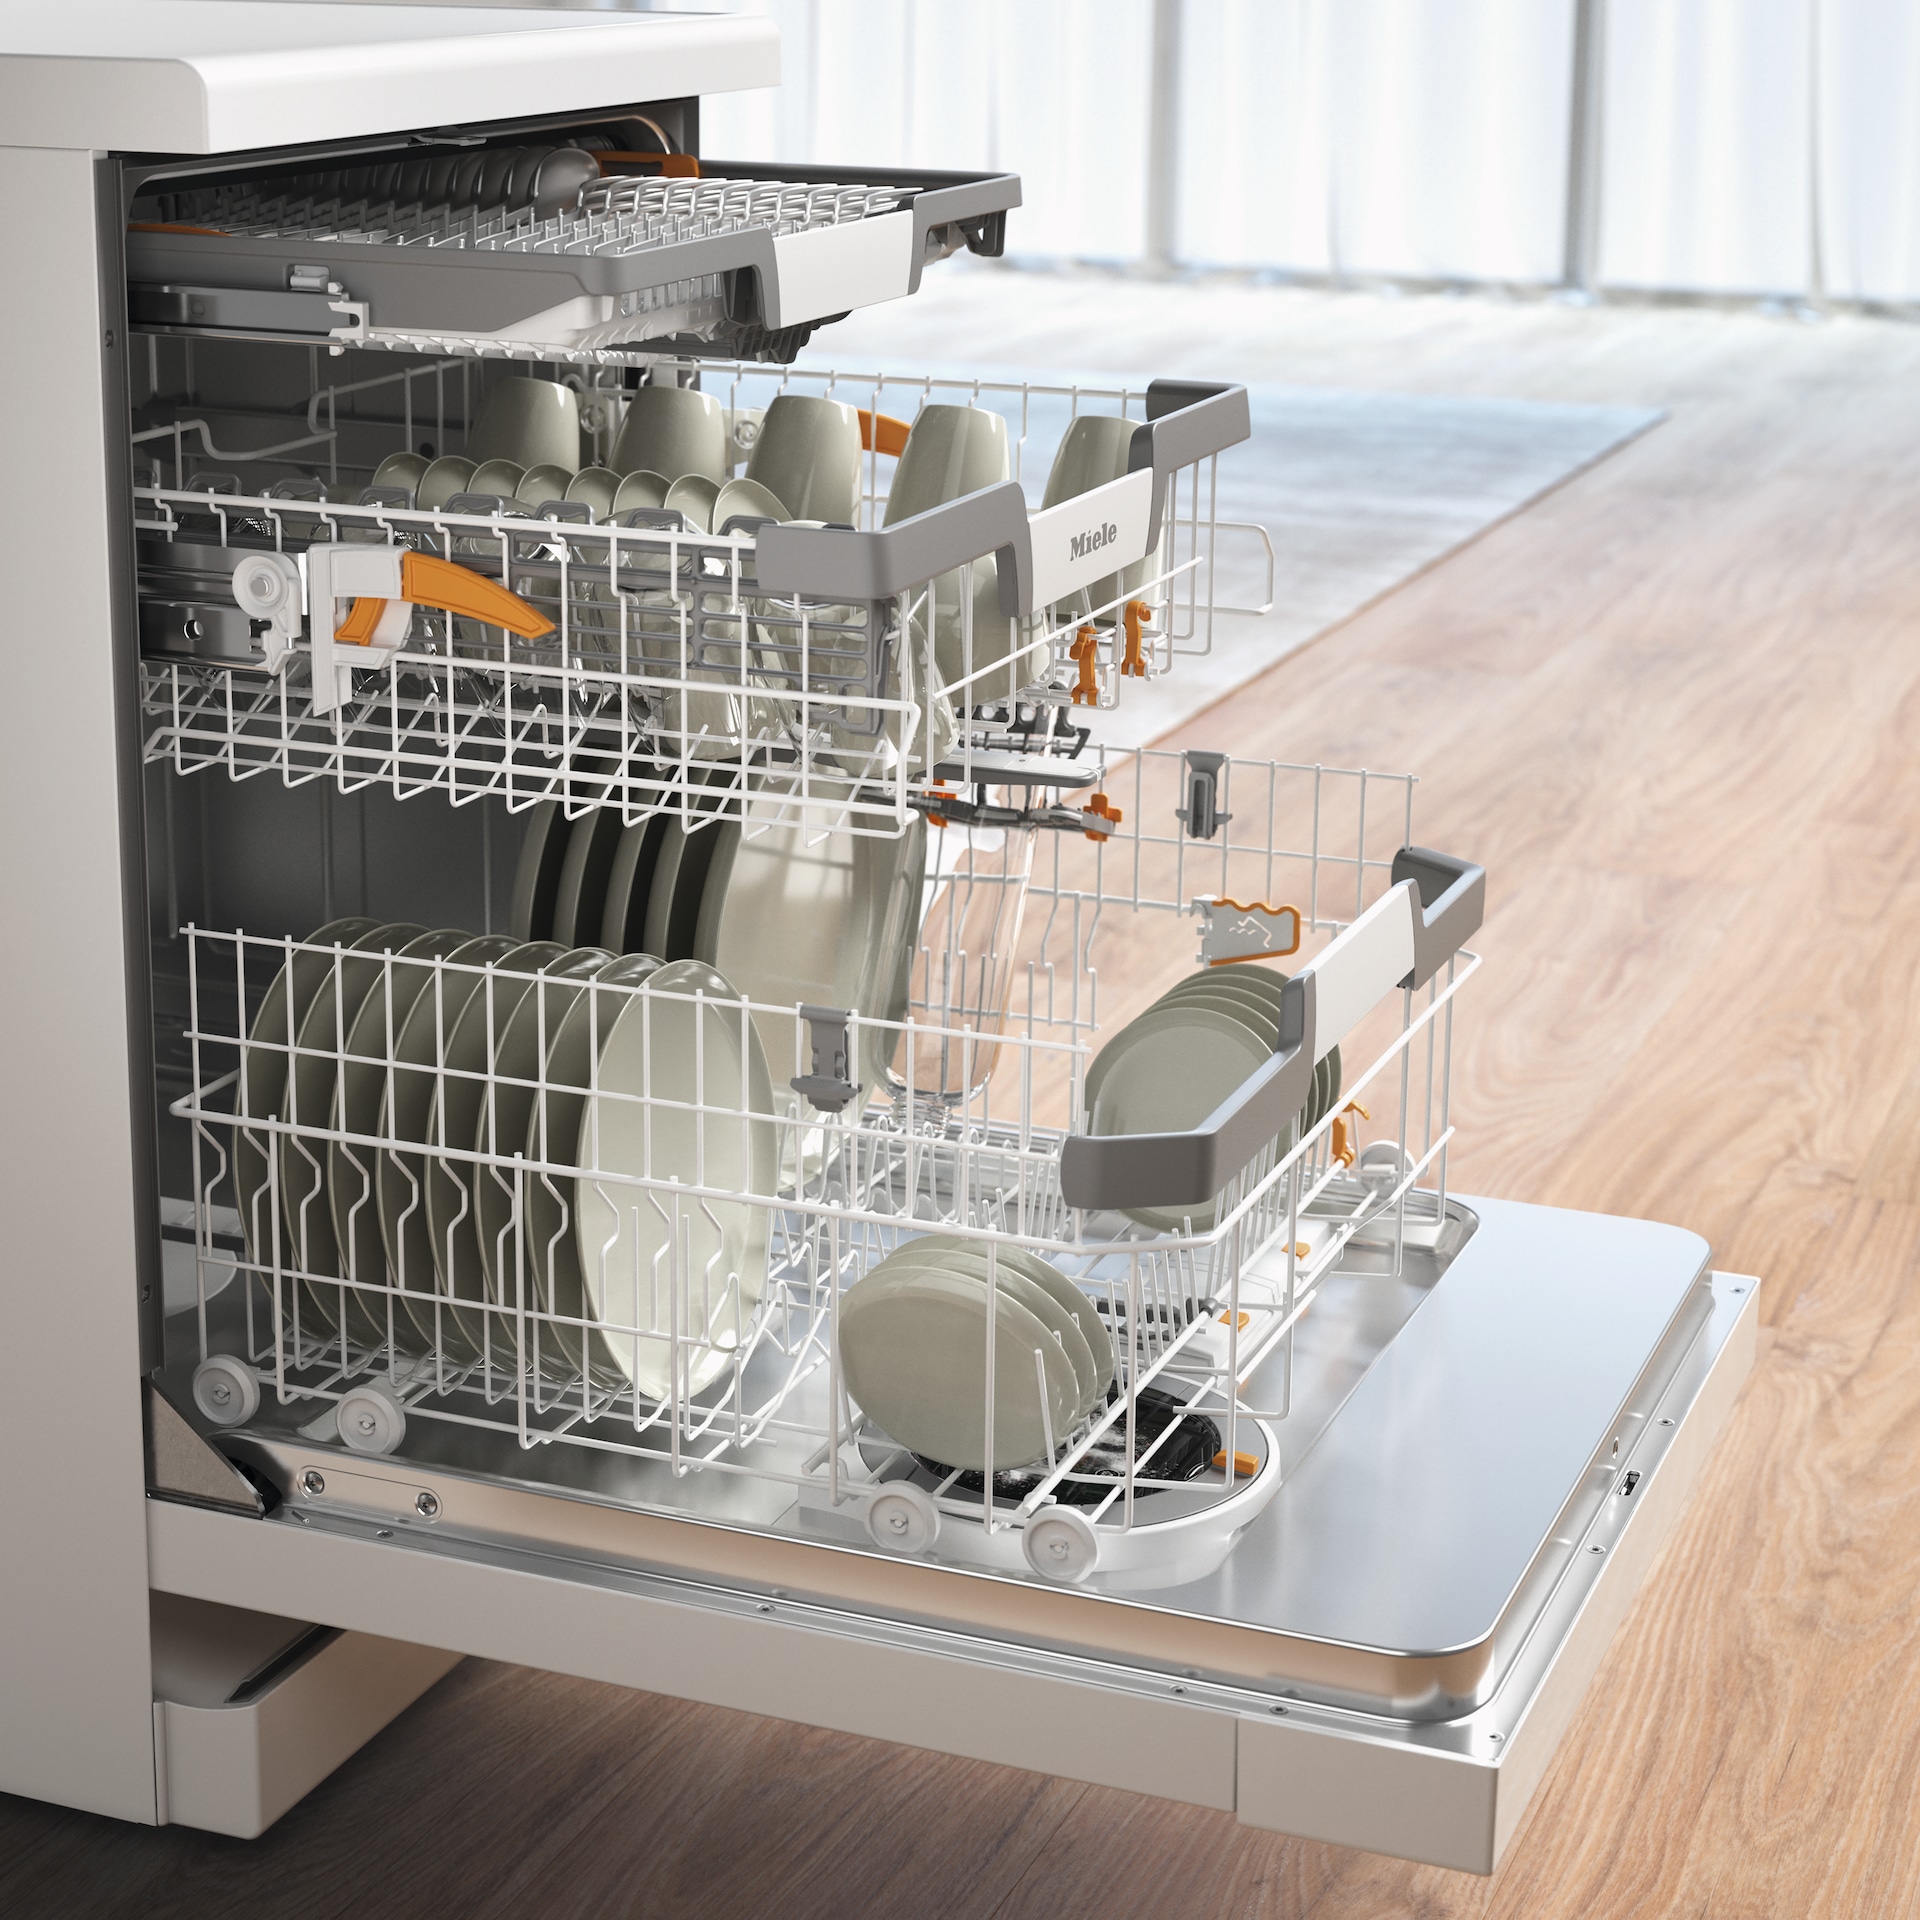 Dishwashers - G 7130 SC AutoDos Brilliant White - 4